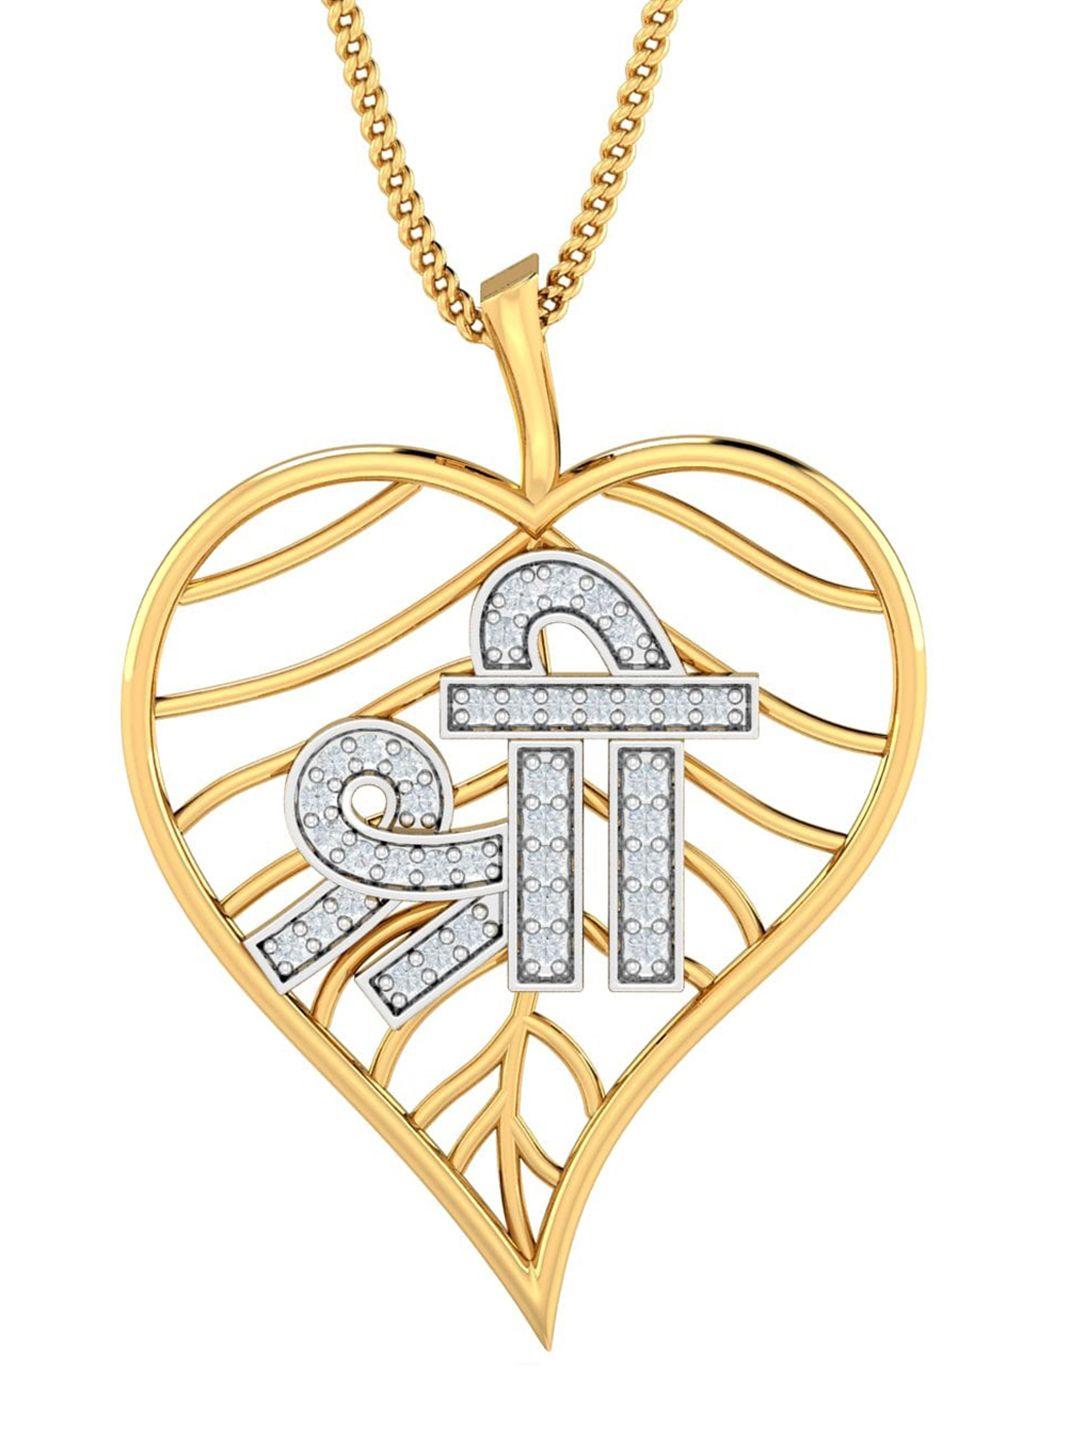 kuberbox-shree-18kt-gold-diamond-studded-pendant--1.74-gm